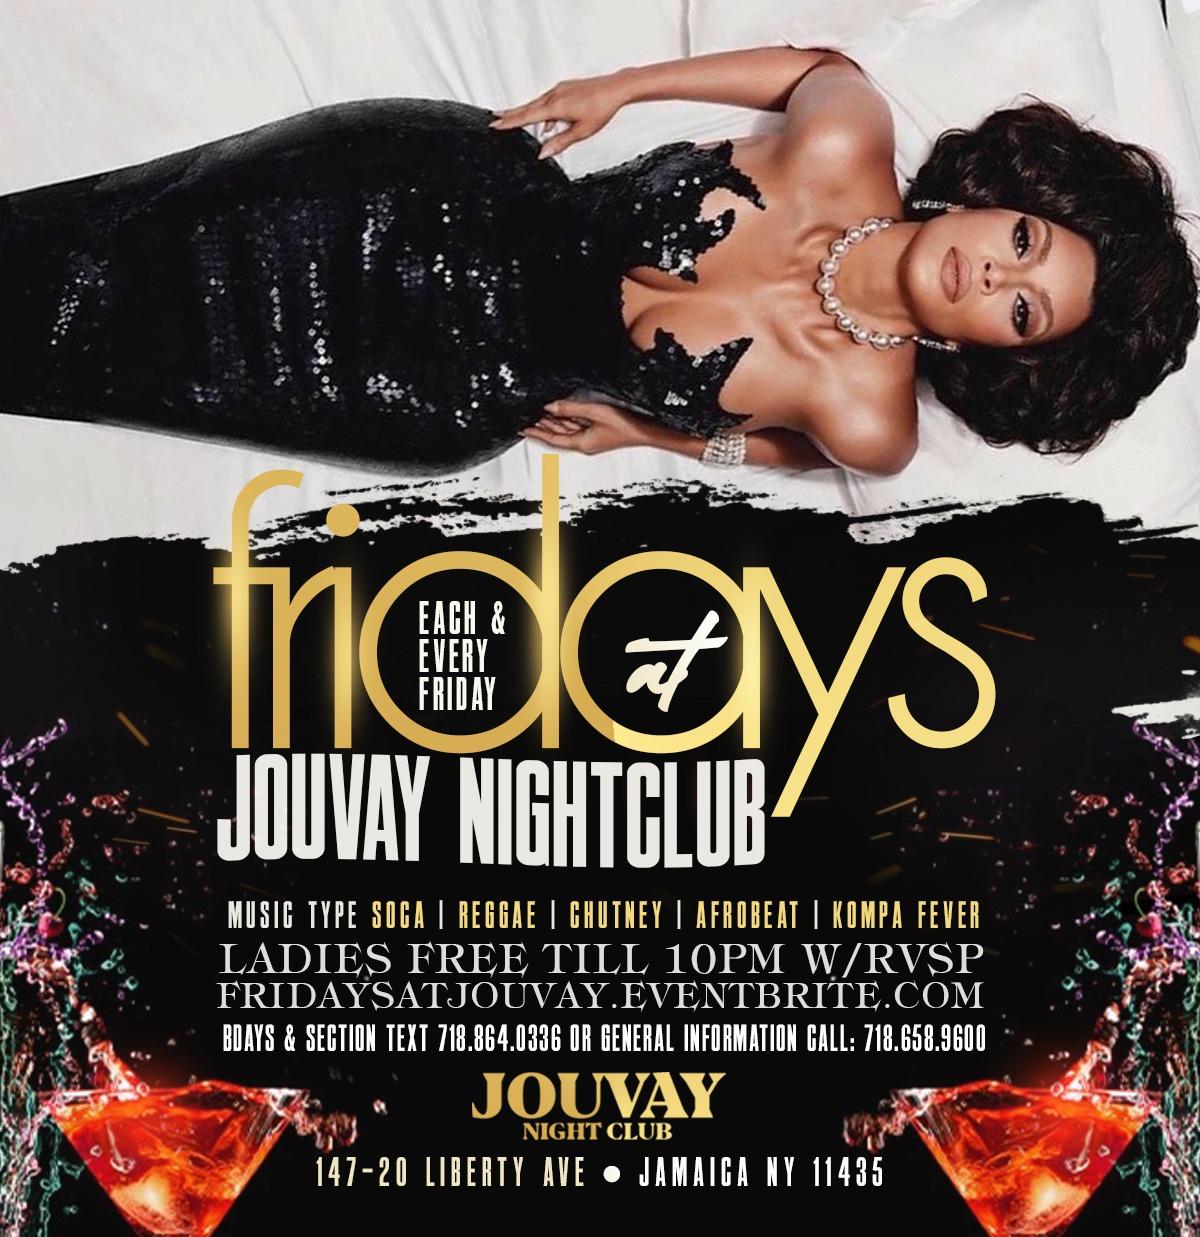 Fridays At Jouvay nightclub BOOM